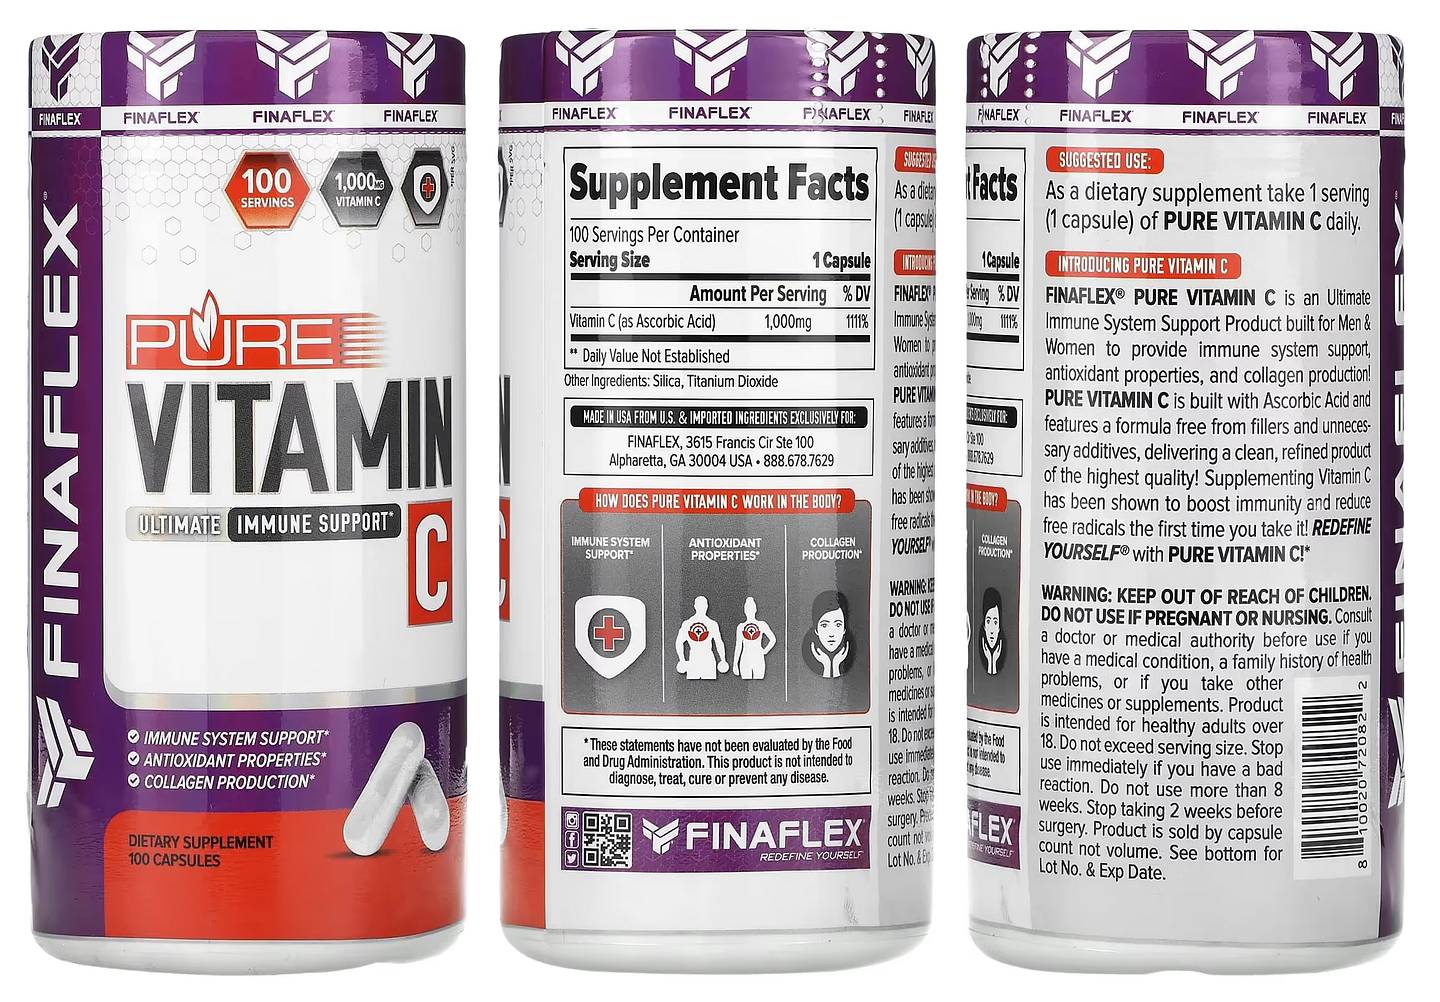 Finaflex, Pure Vitamin C packaging